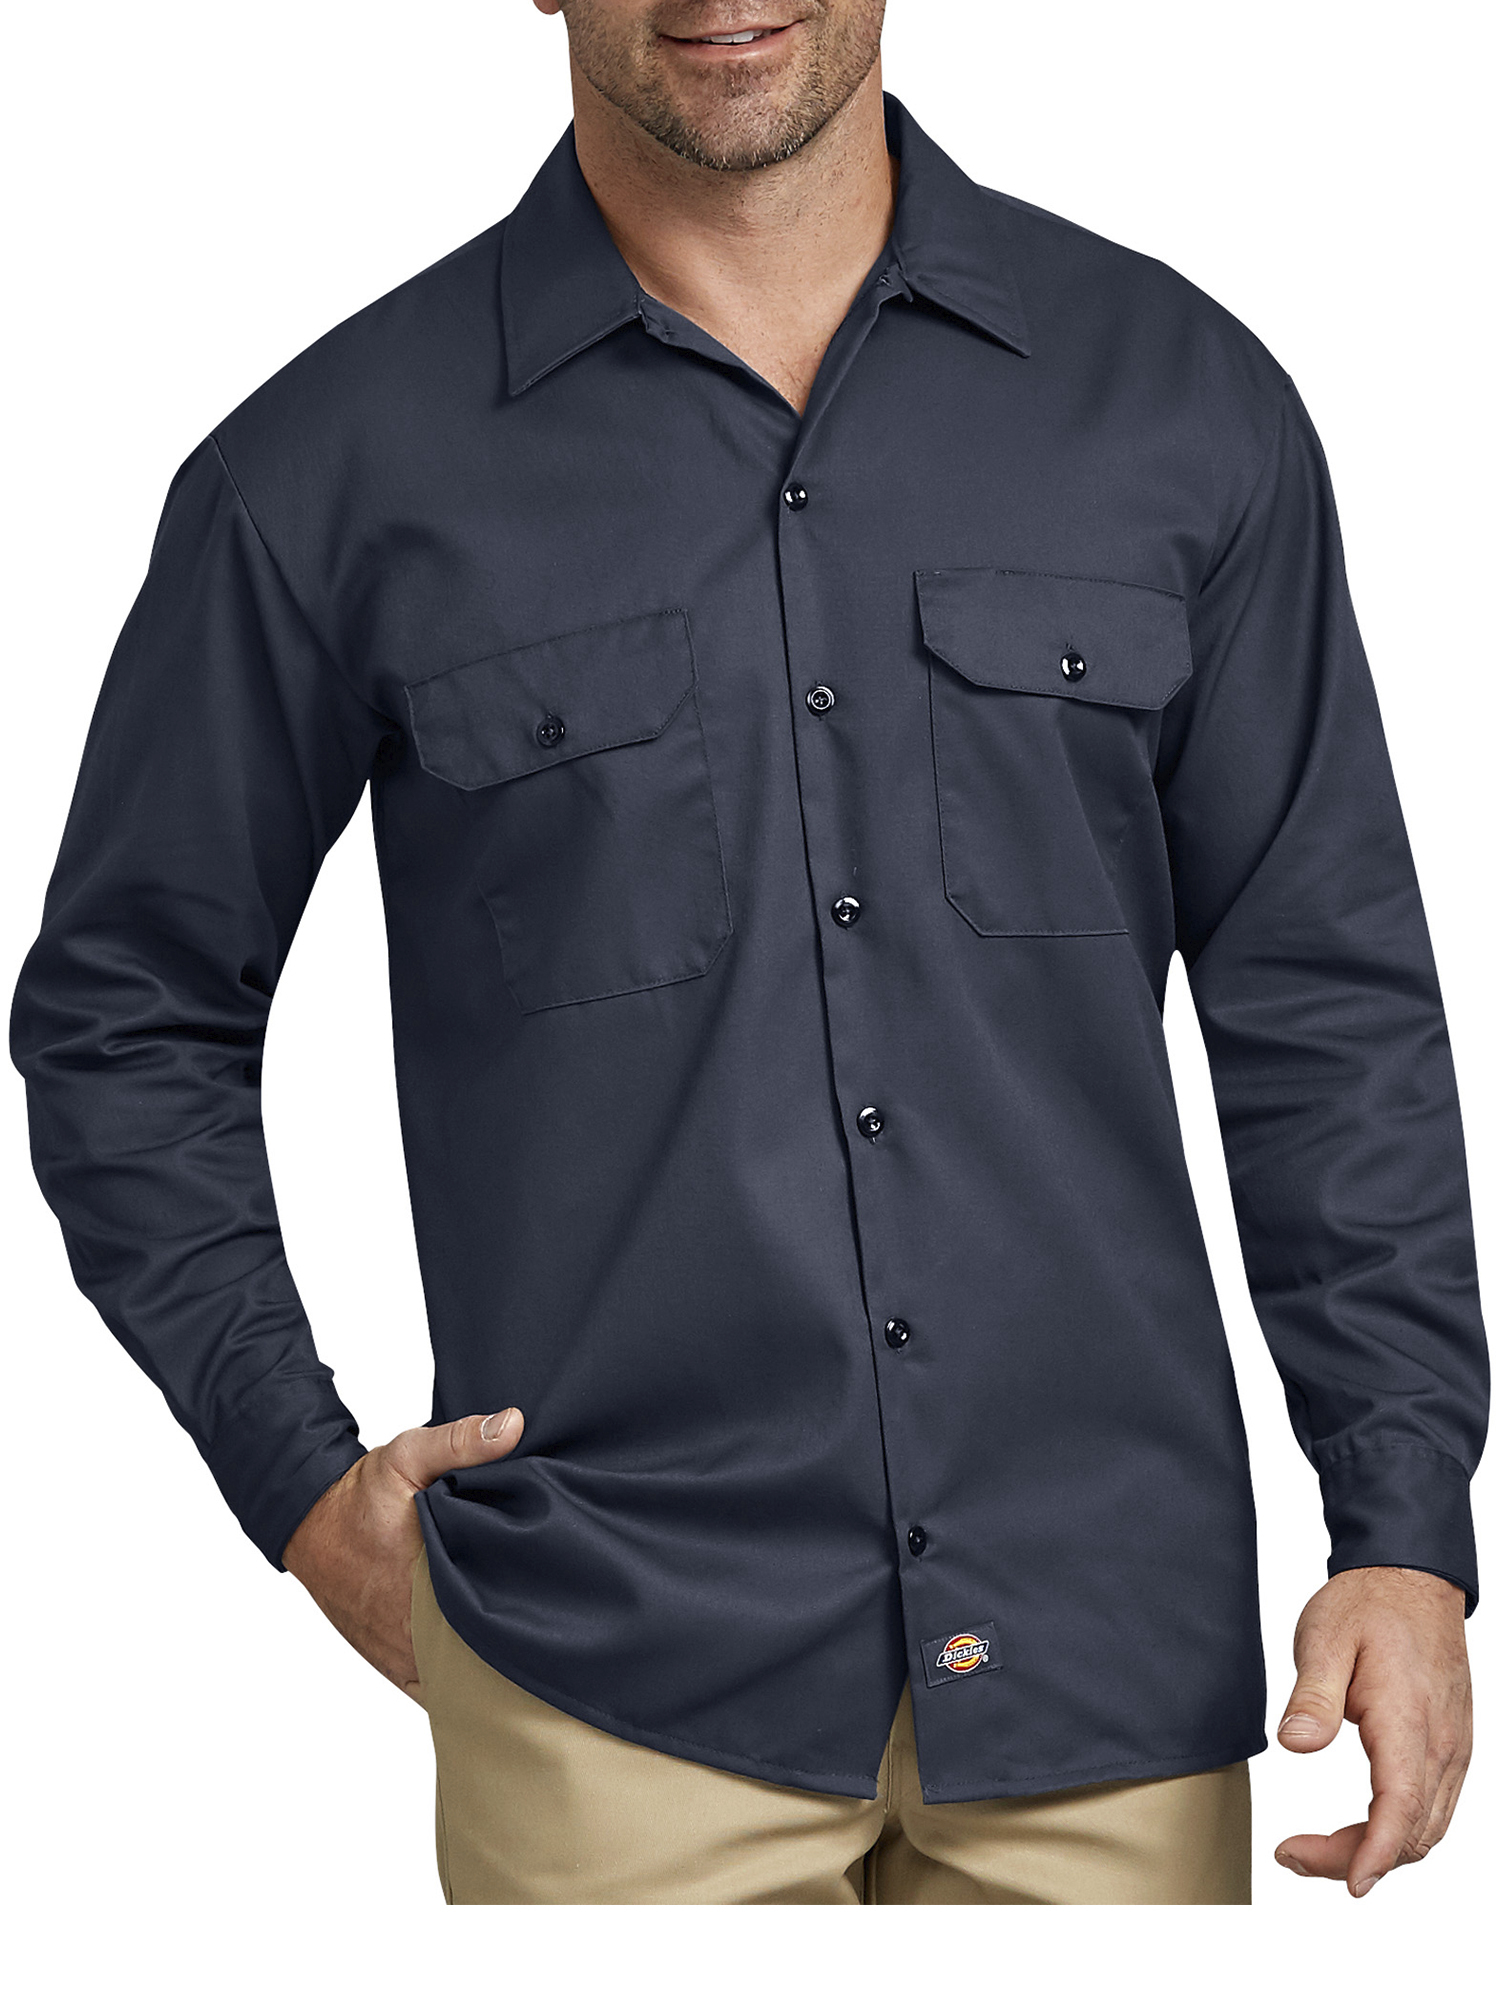 Dickies Mens and Big Men's Original Fit Long Sleeve Twill Work Shirt - image 1 of 2